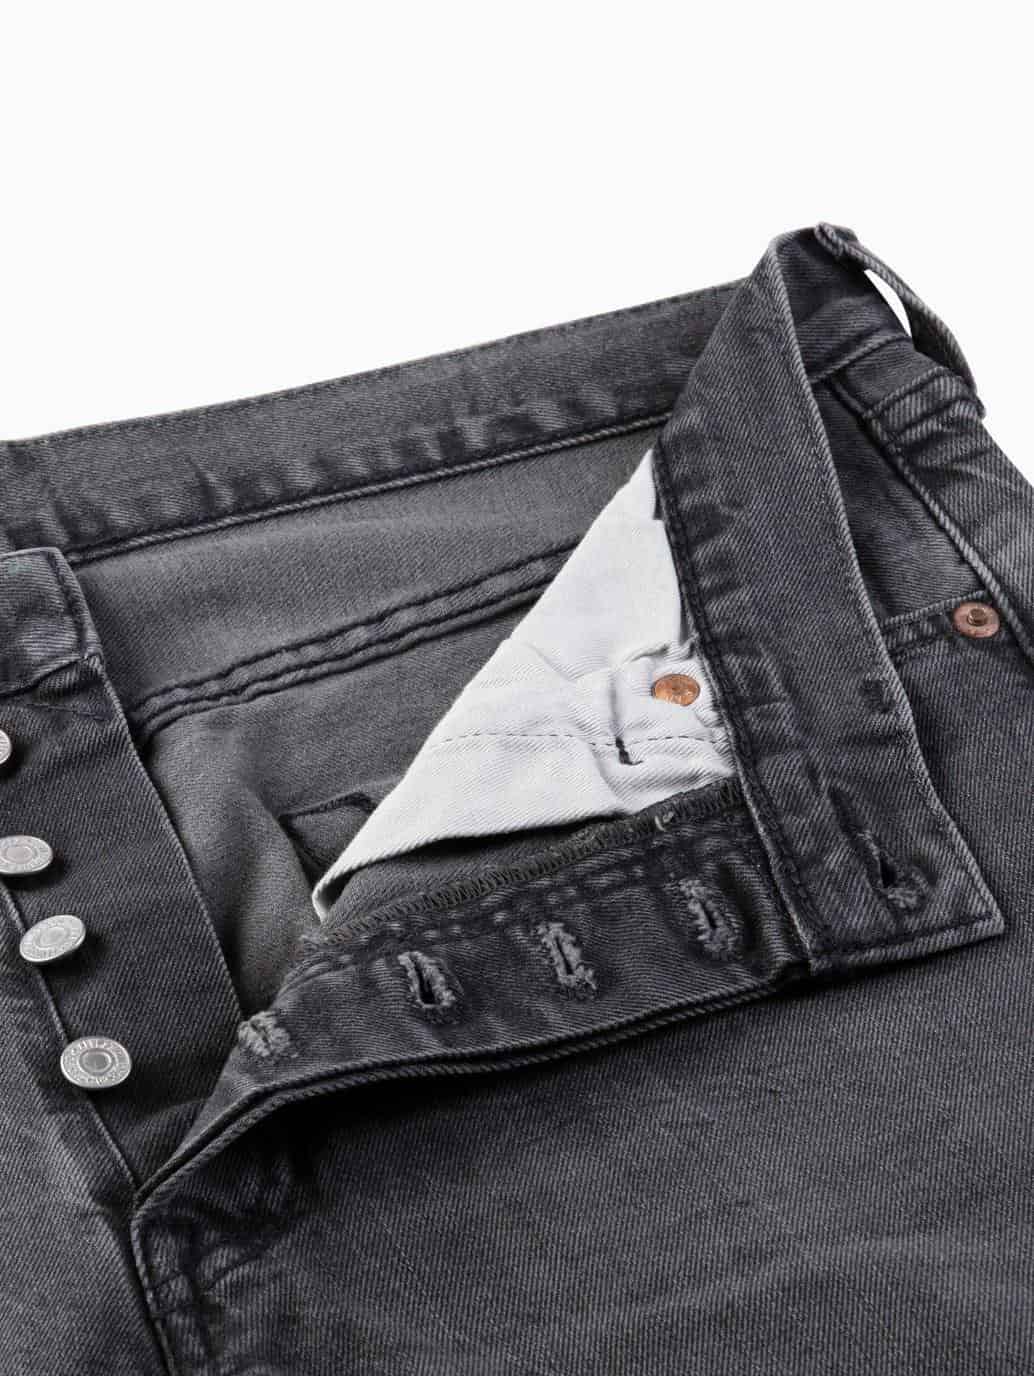 levis malaysia 501 original fit jeans for men parrish fabric details